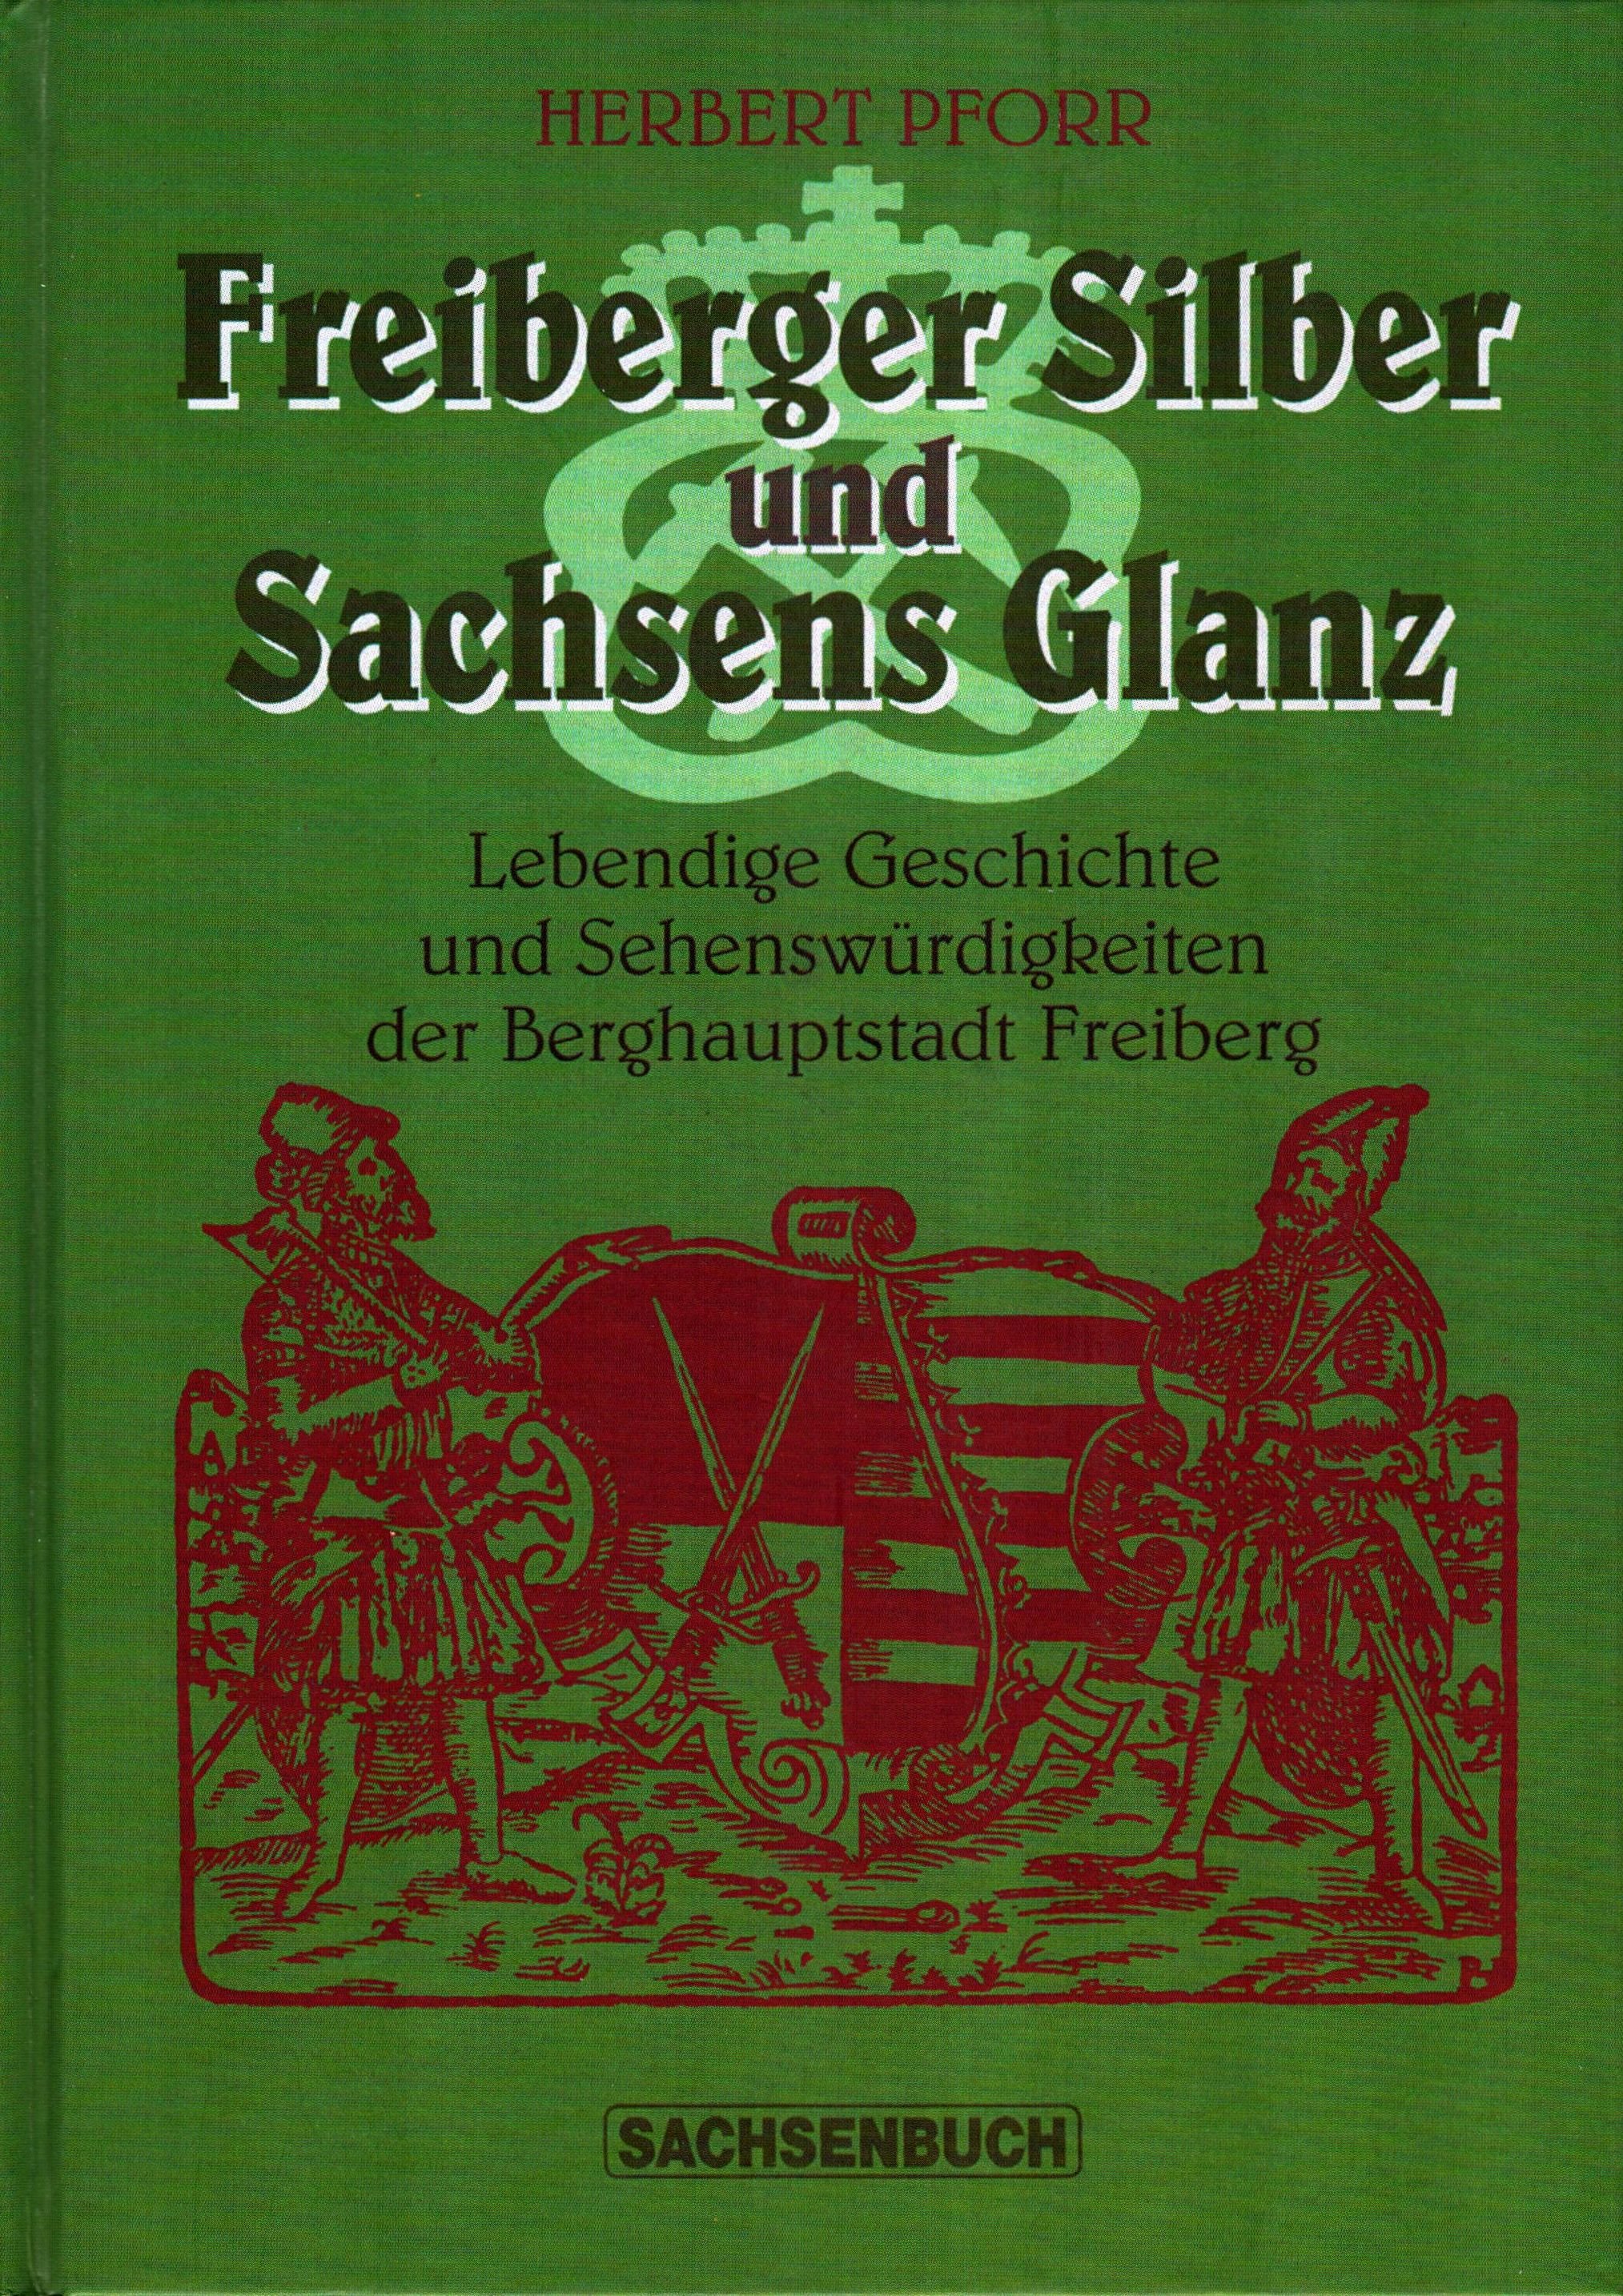 Freiberger Silber und Sachsens Glanz (Archiv SAXONIA-FREIBERG-STIFTUNG CC BY-NC-SA)